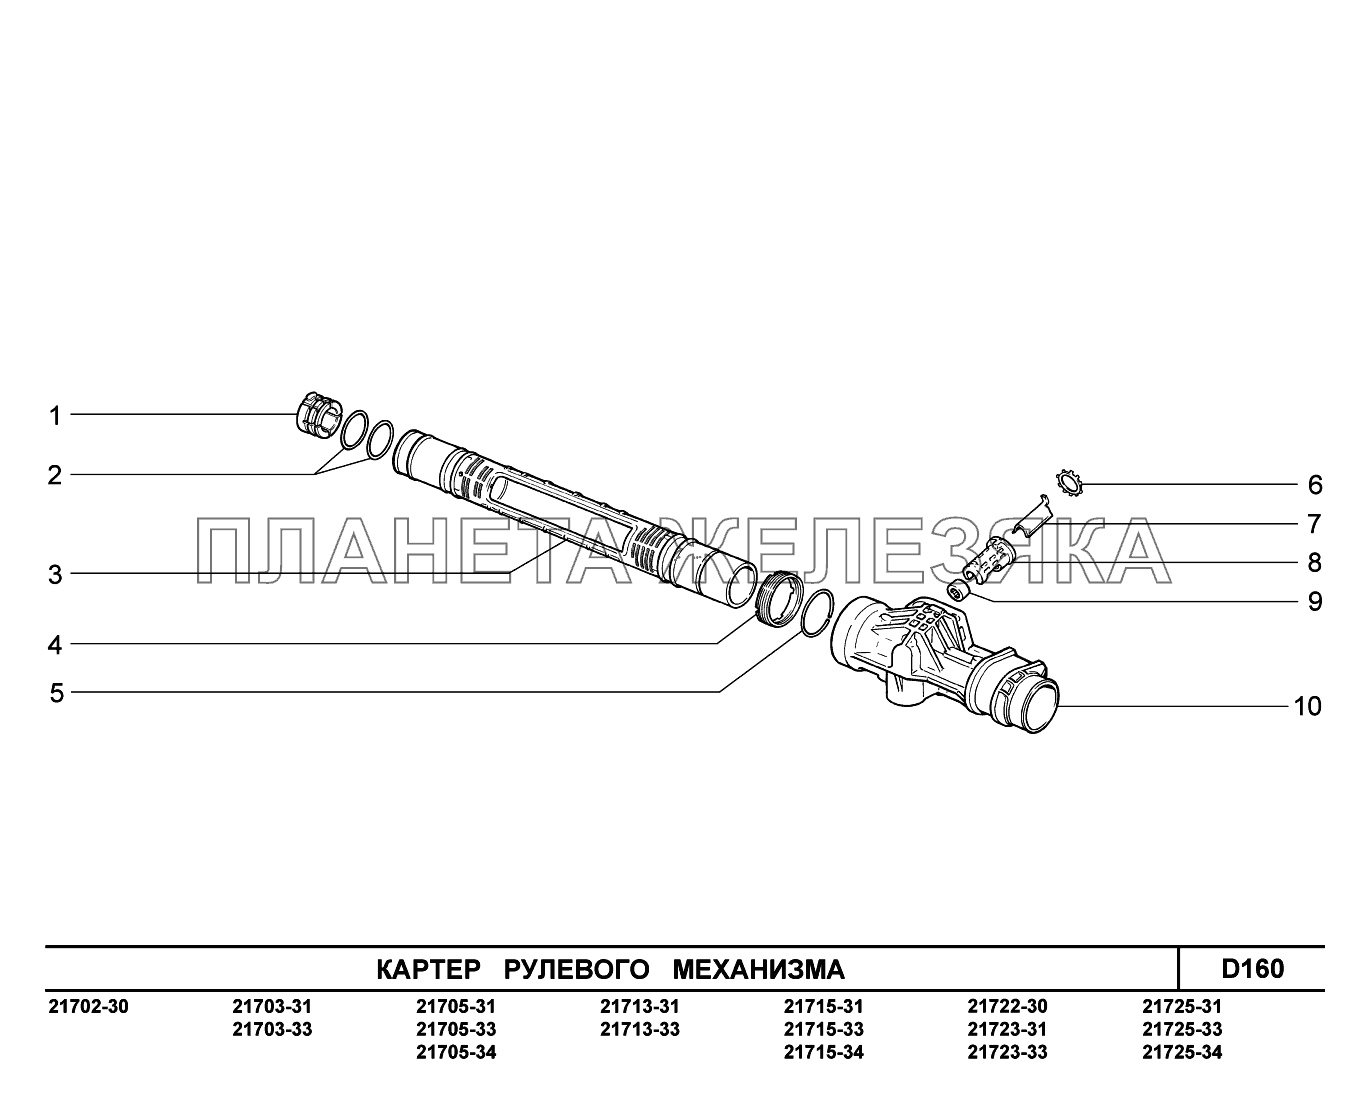 D160. Картер рулевого механизма ВАЗ-2170 